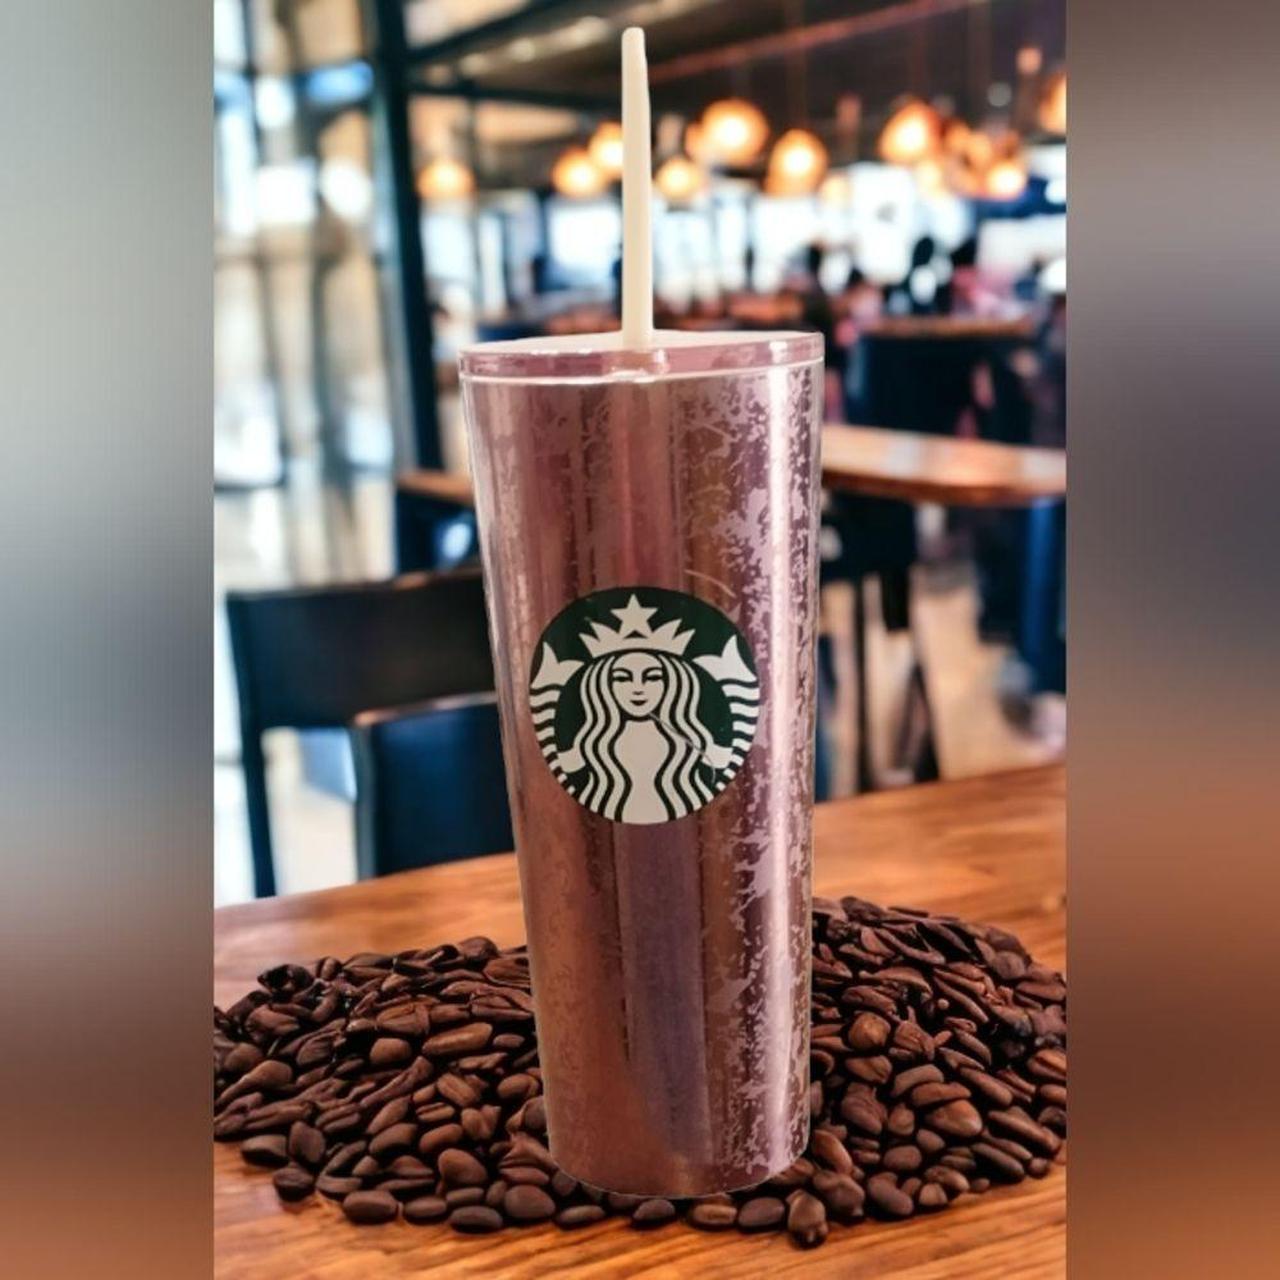 16 oz rose gold pink Starbucks tumbler cup with - Depop